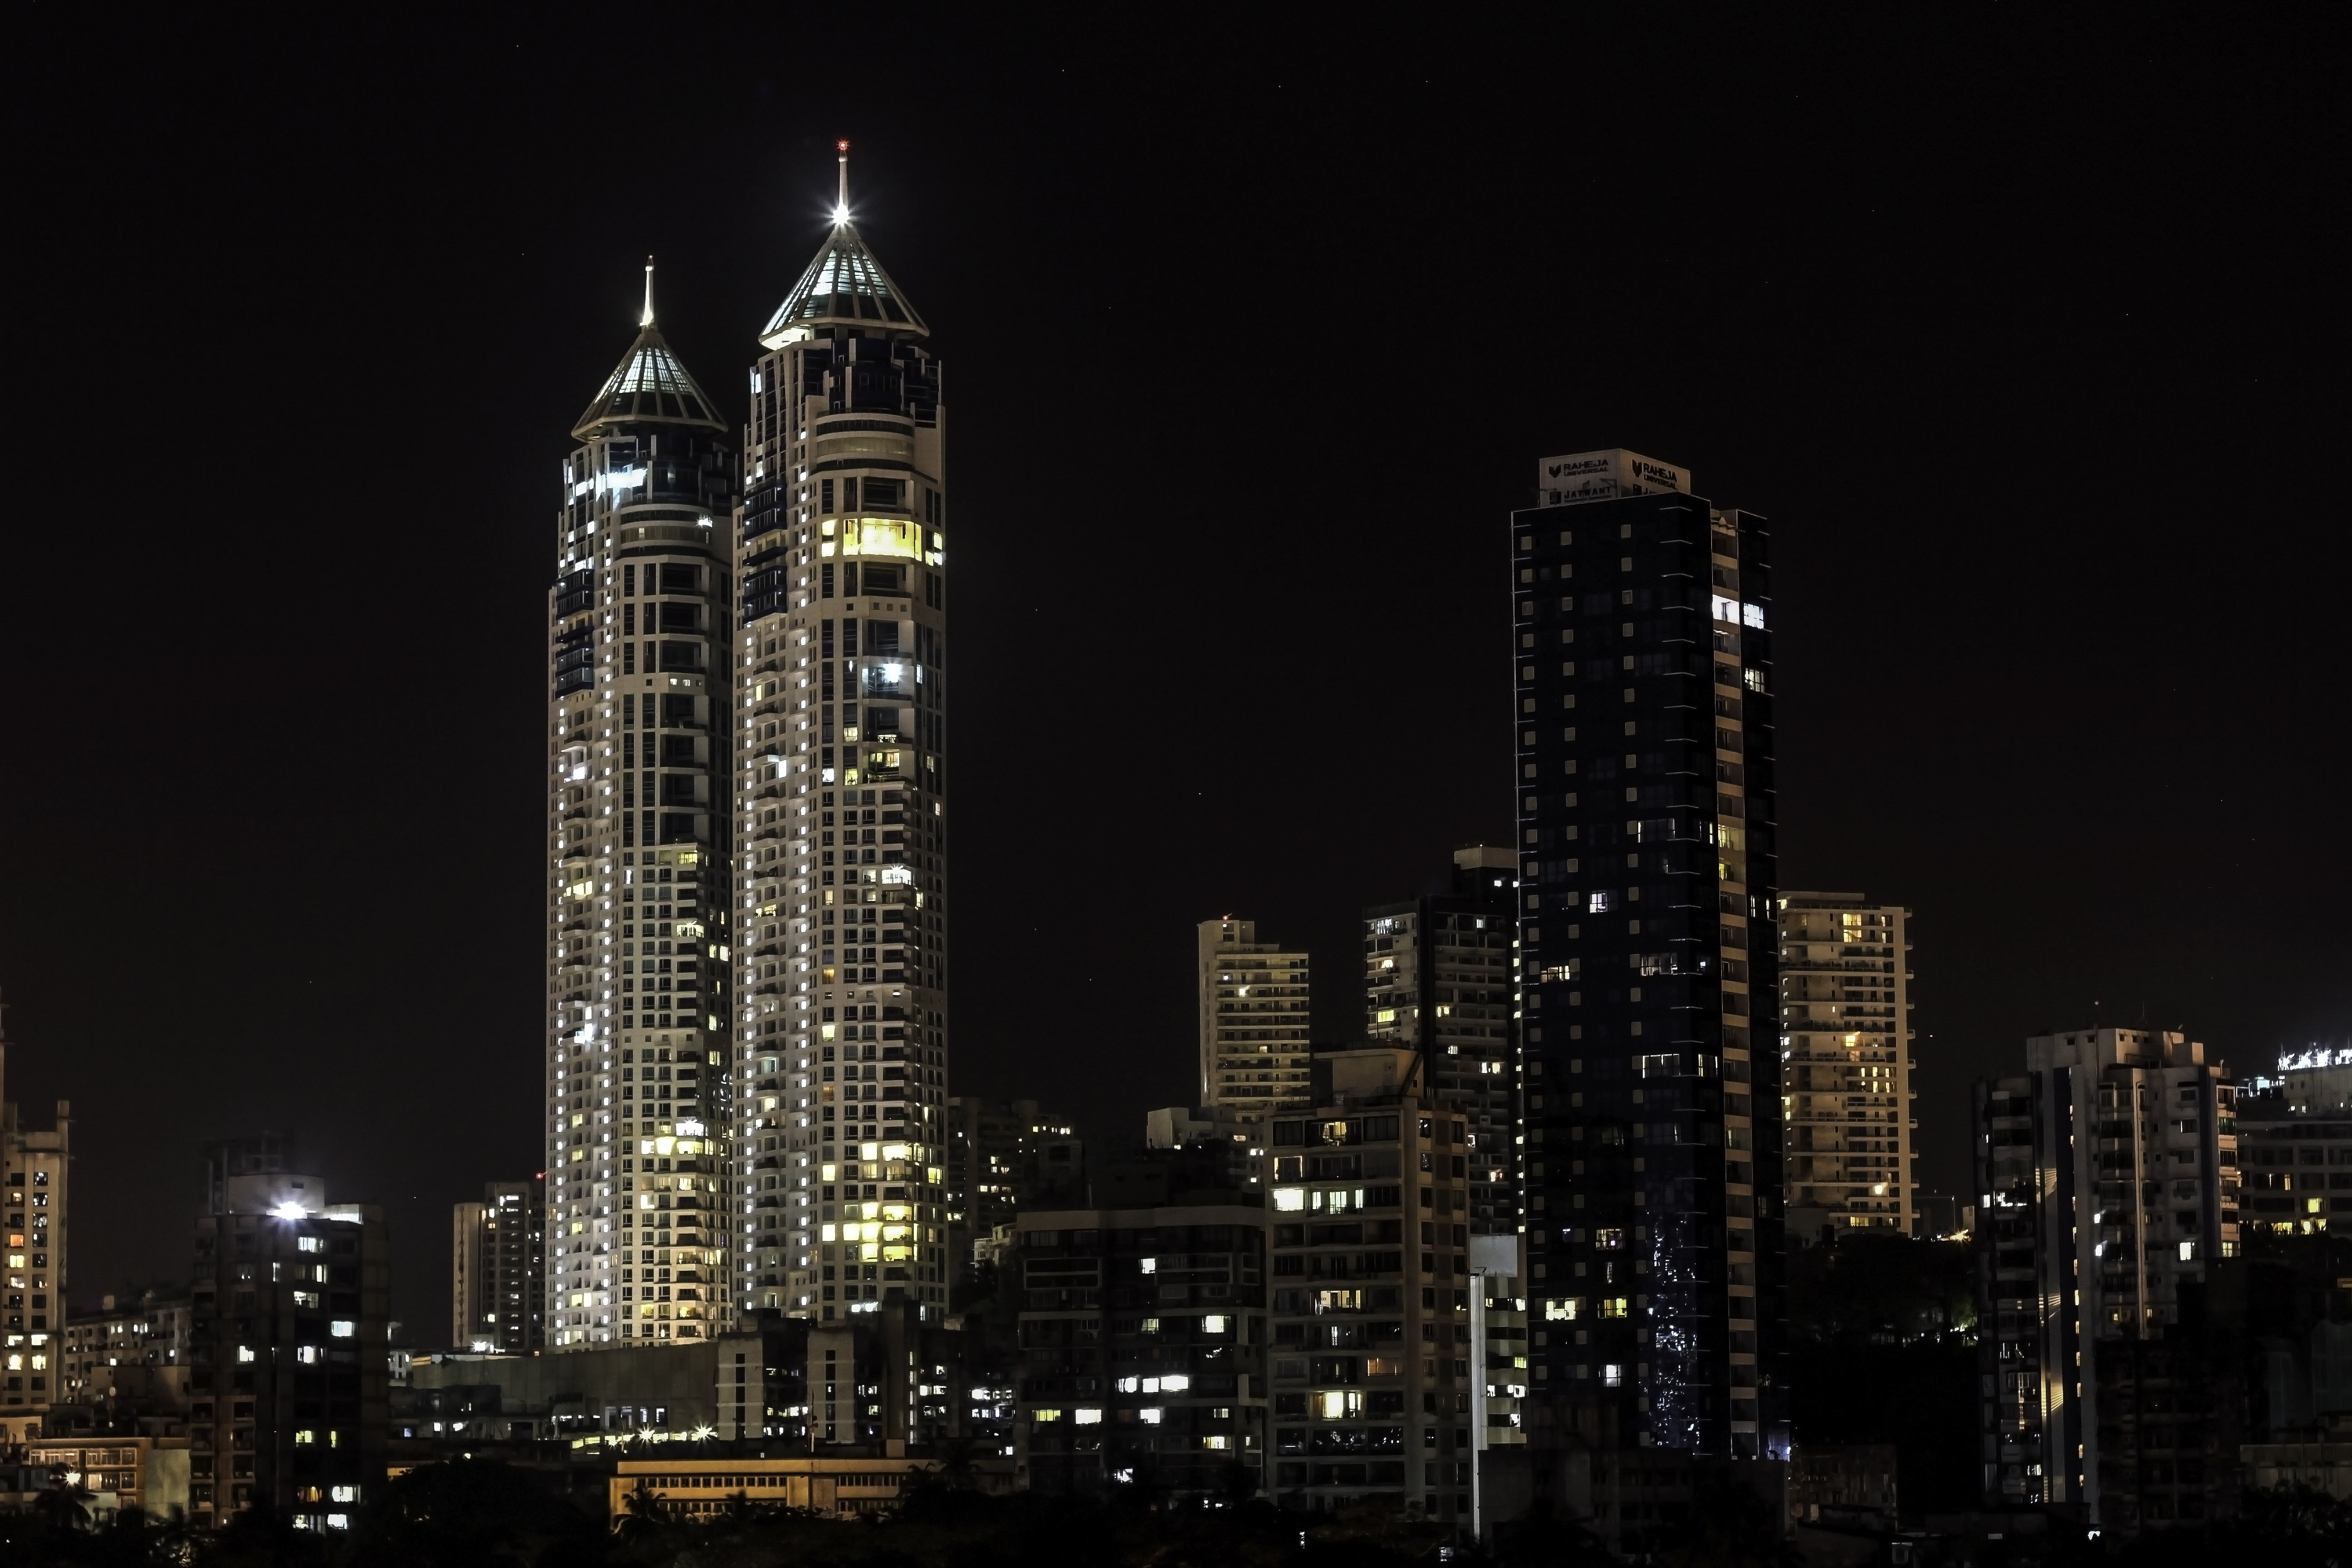 Night skyscrapers with lights in Mumbai, India image Domain photo